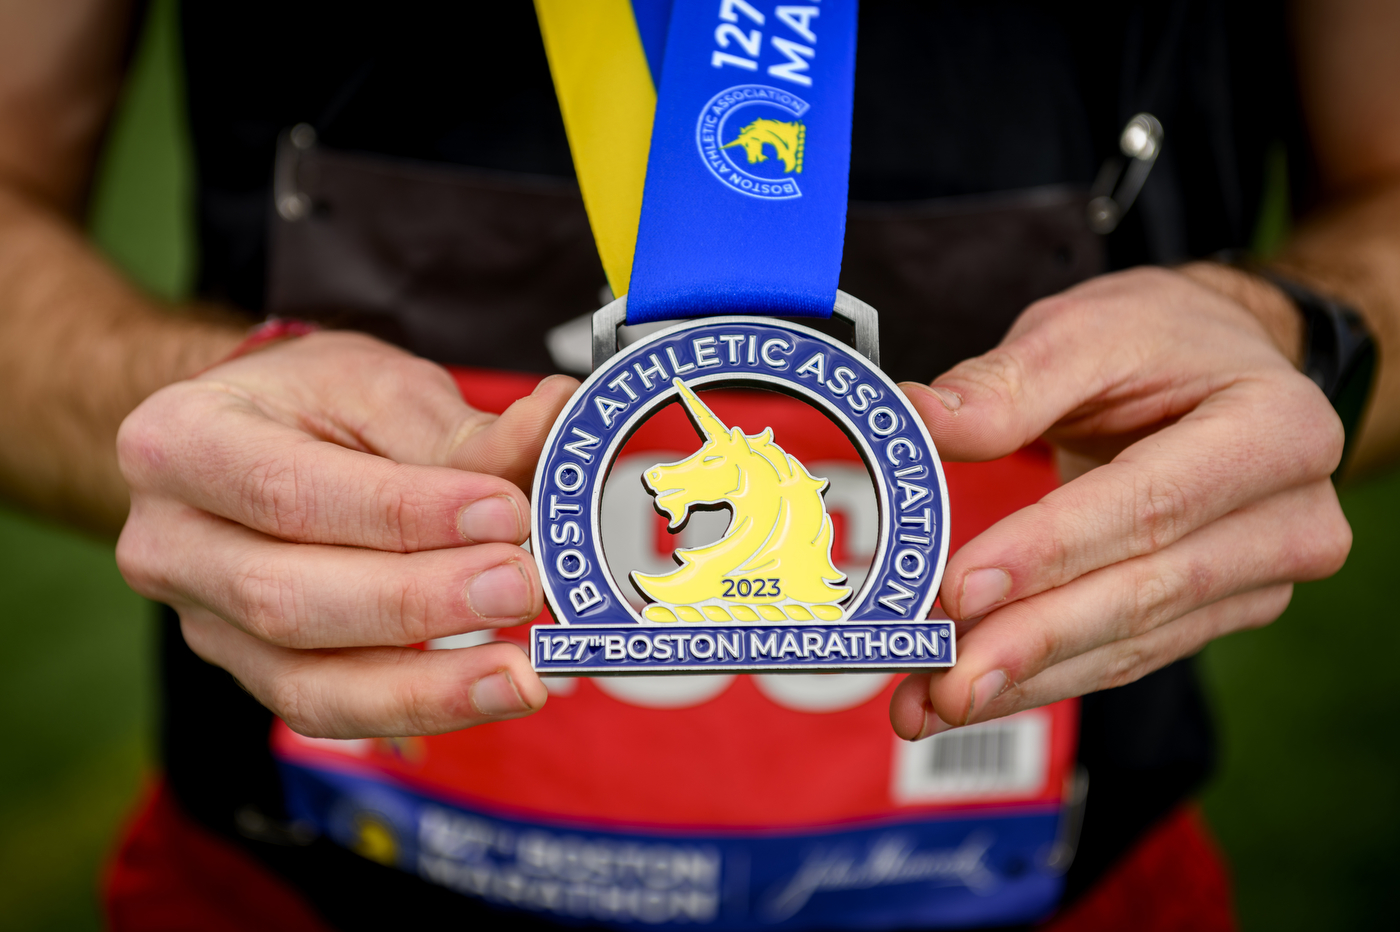 A closeup of Castronuovo's medal, saying 'Boston Athletic Association 2023, 127th Boston Marathon'